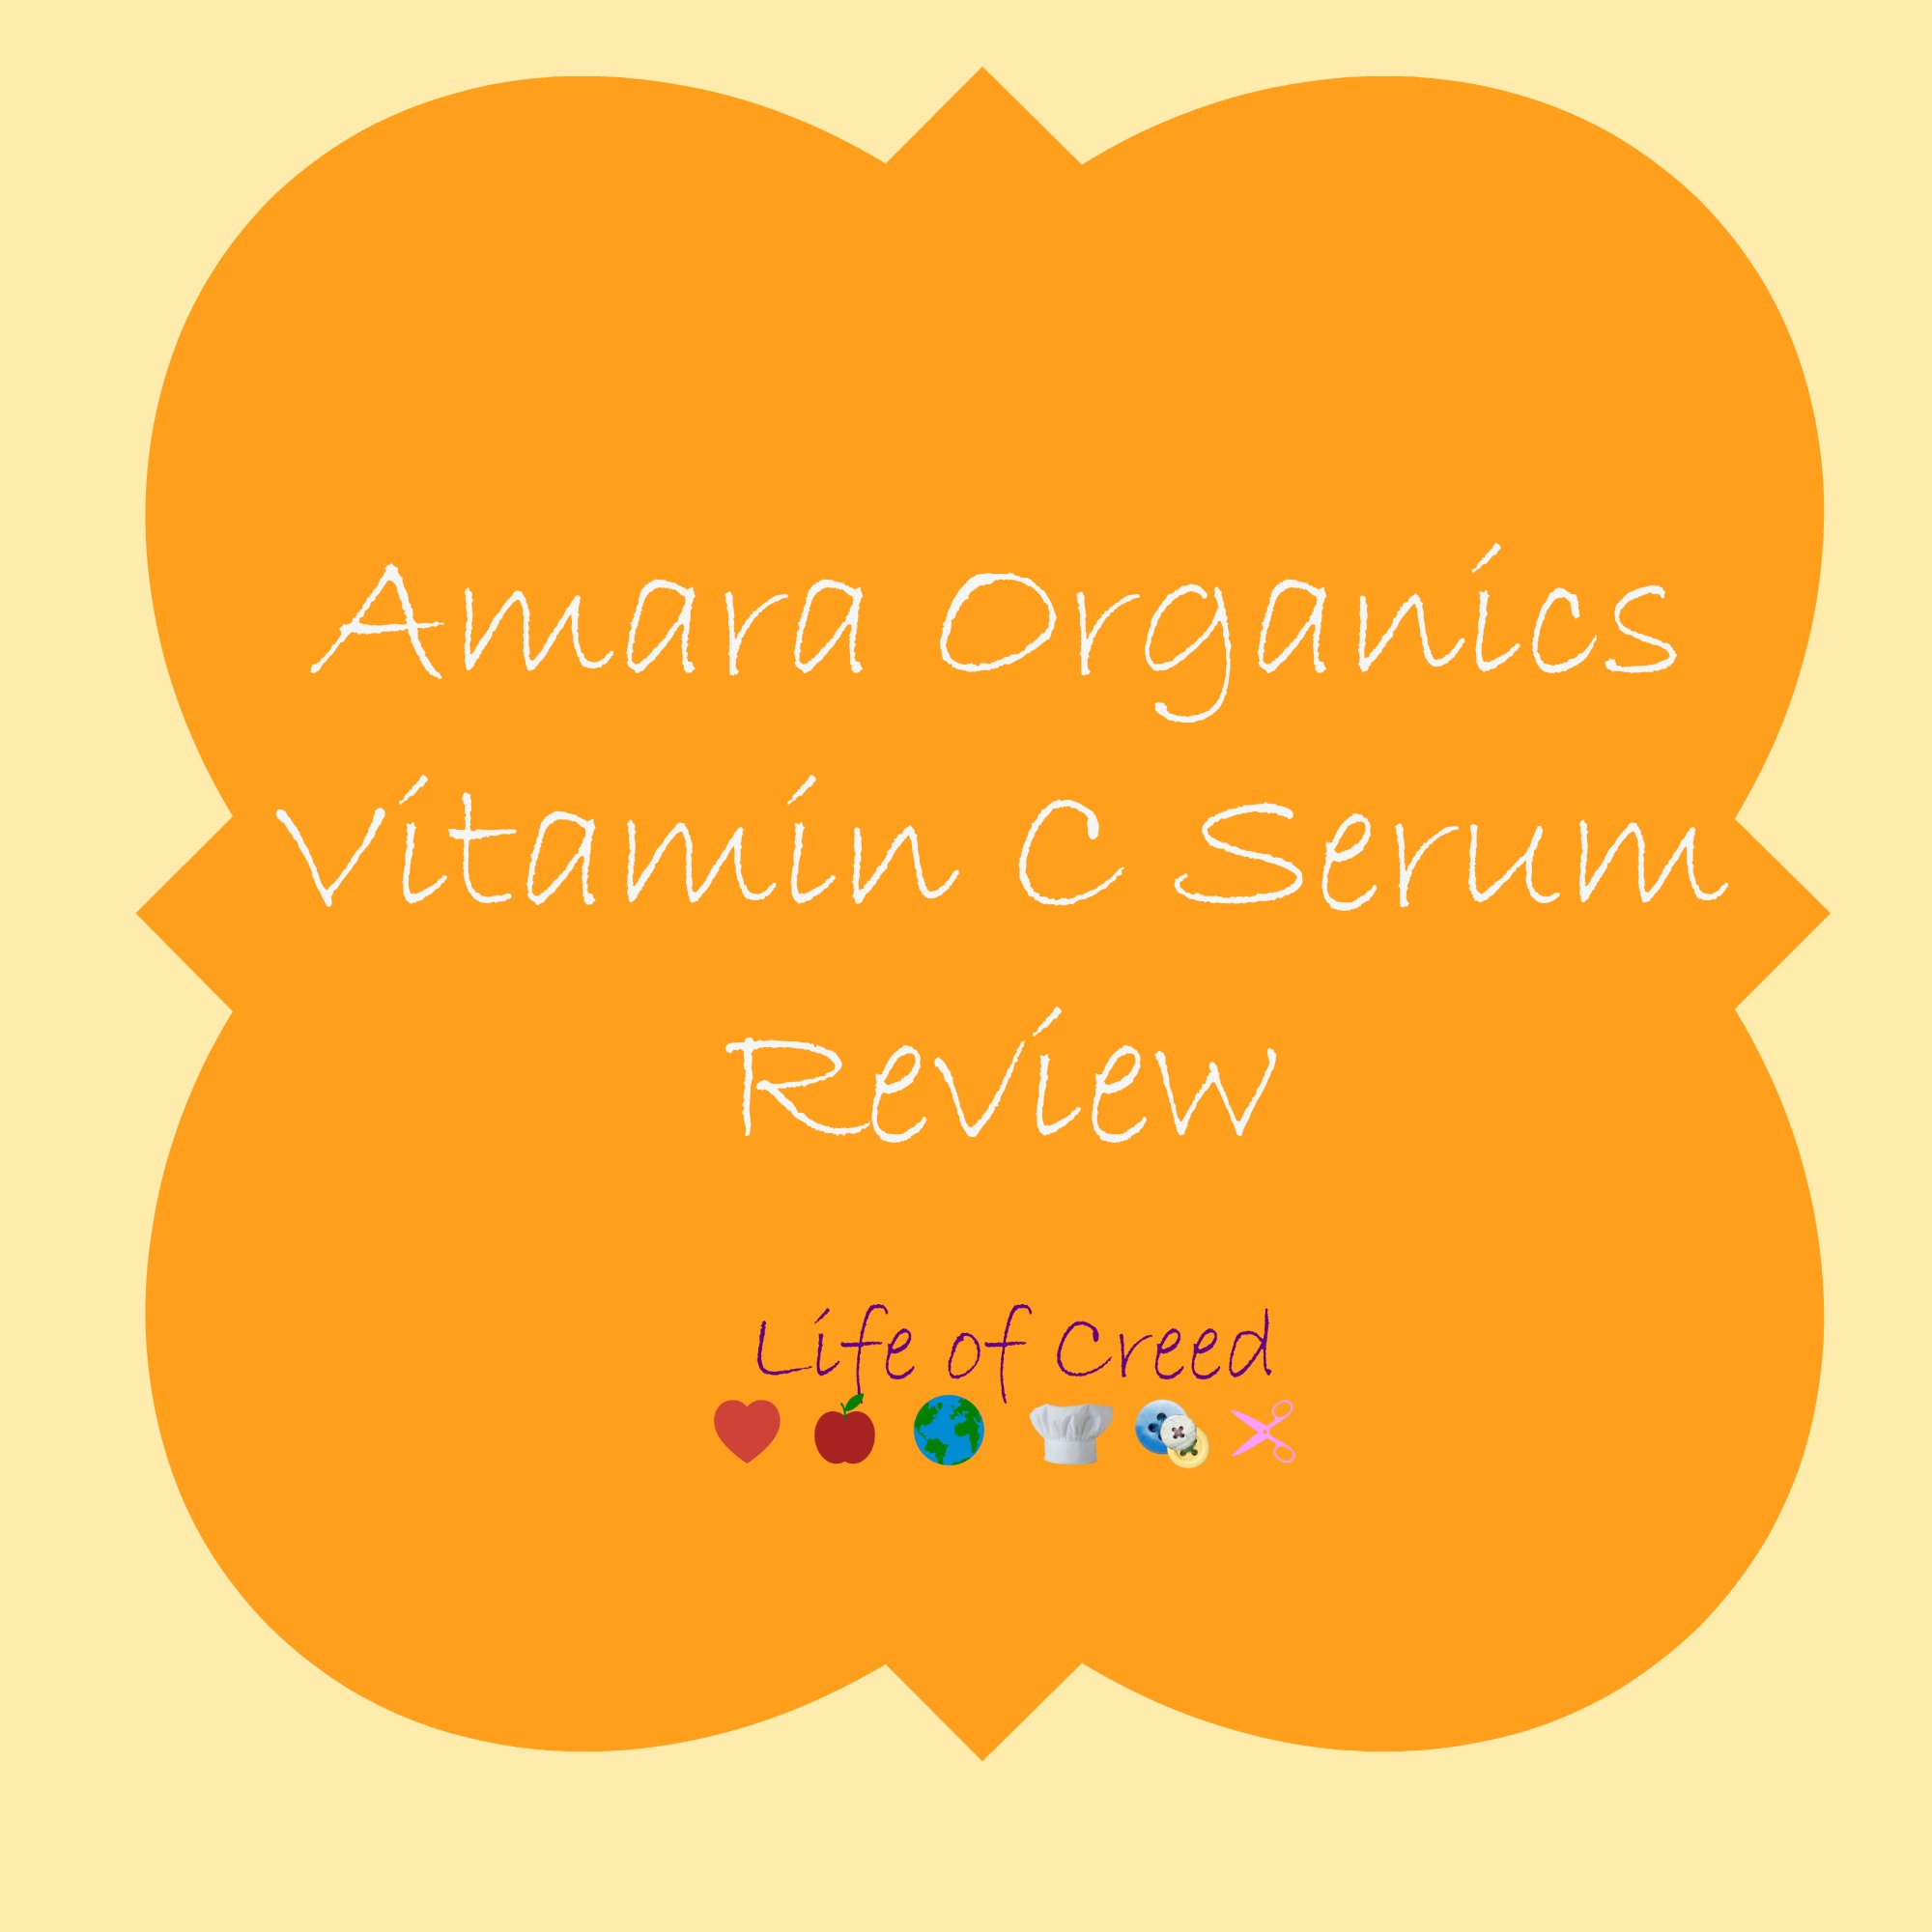 Amara Organics Vitamin C Review via @LifeofCreed